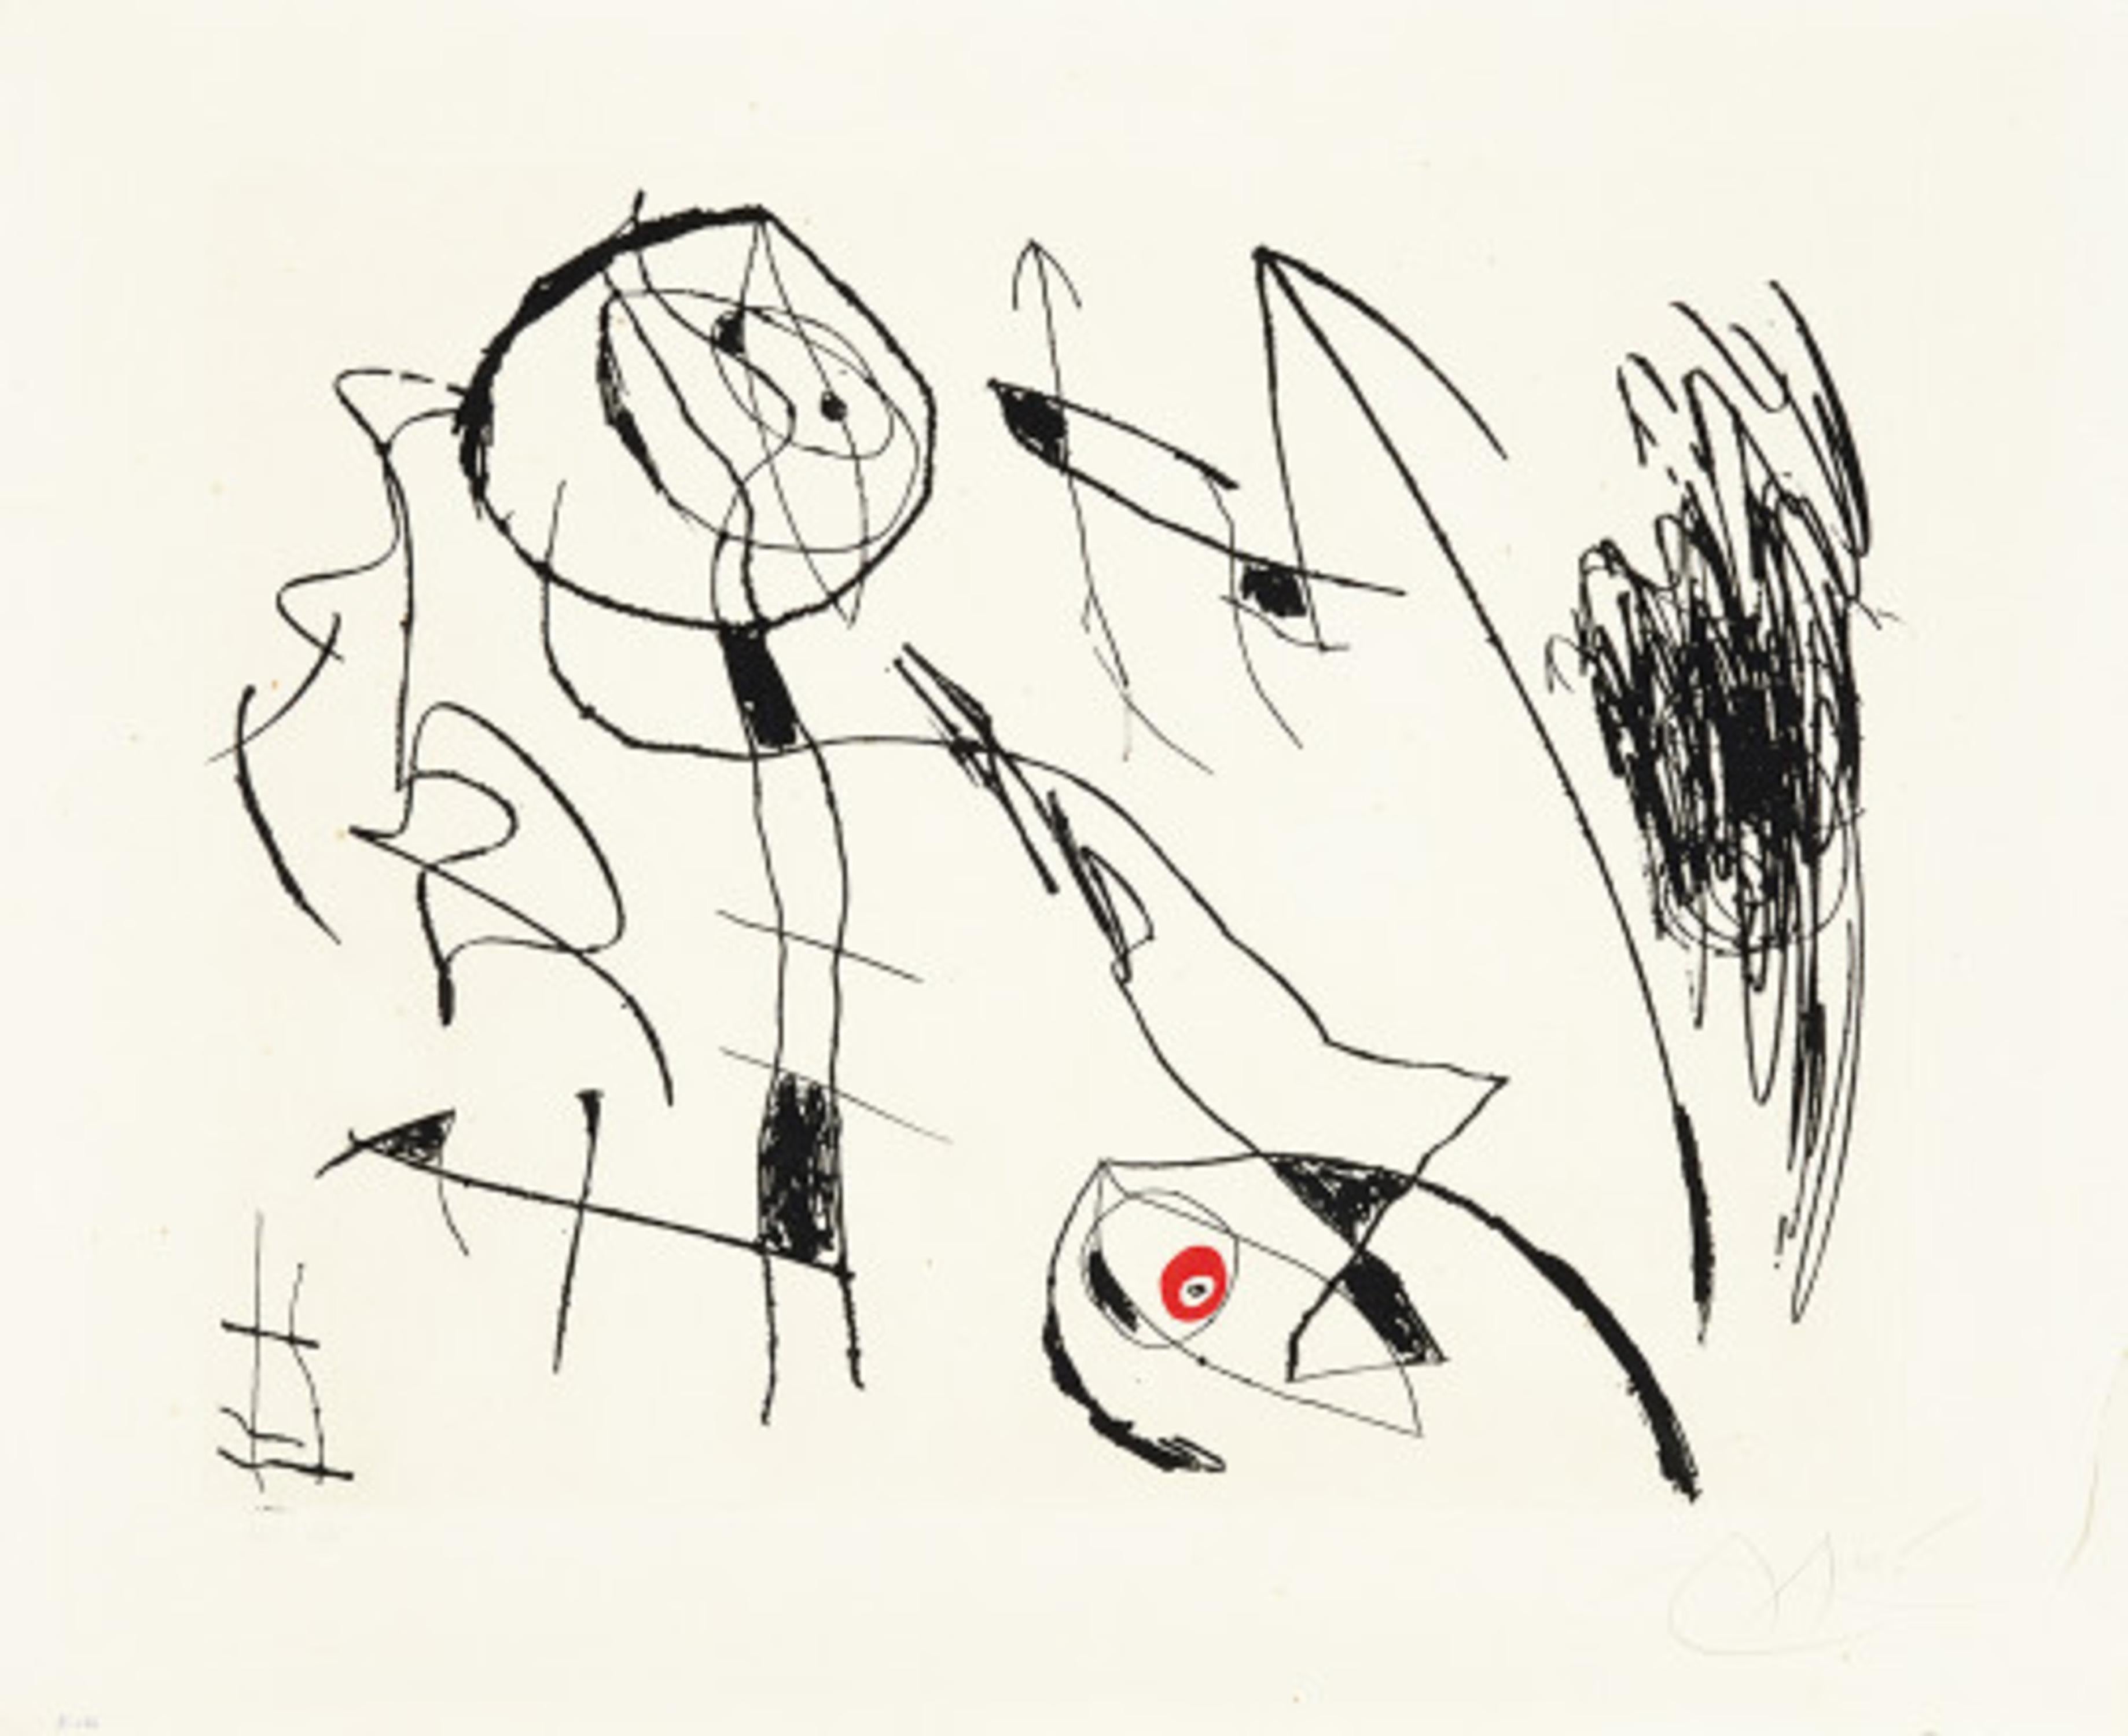 Serie Mallorca I - Print by Joan Miró